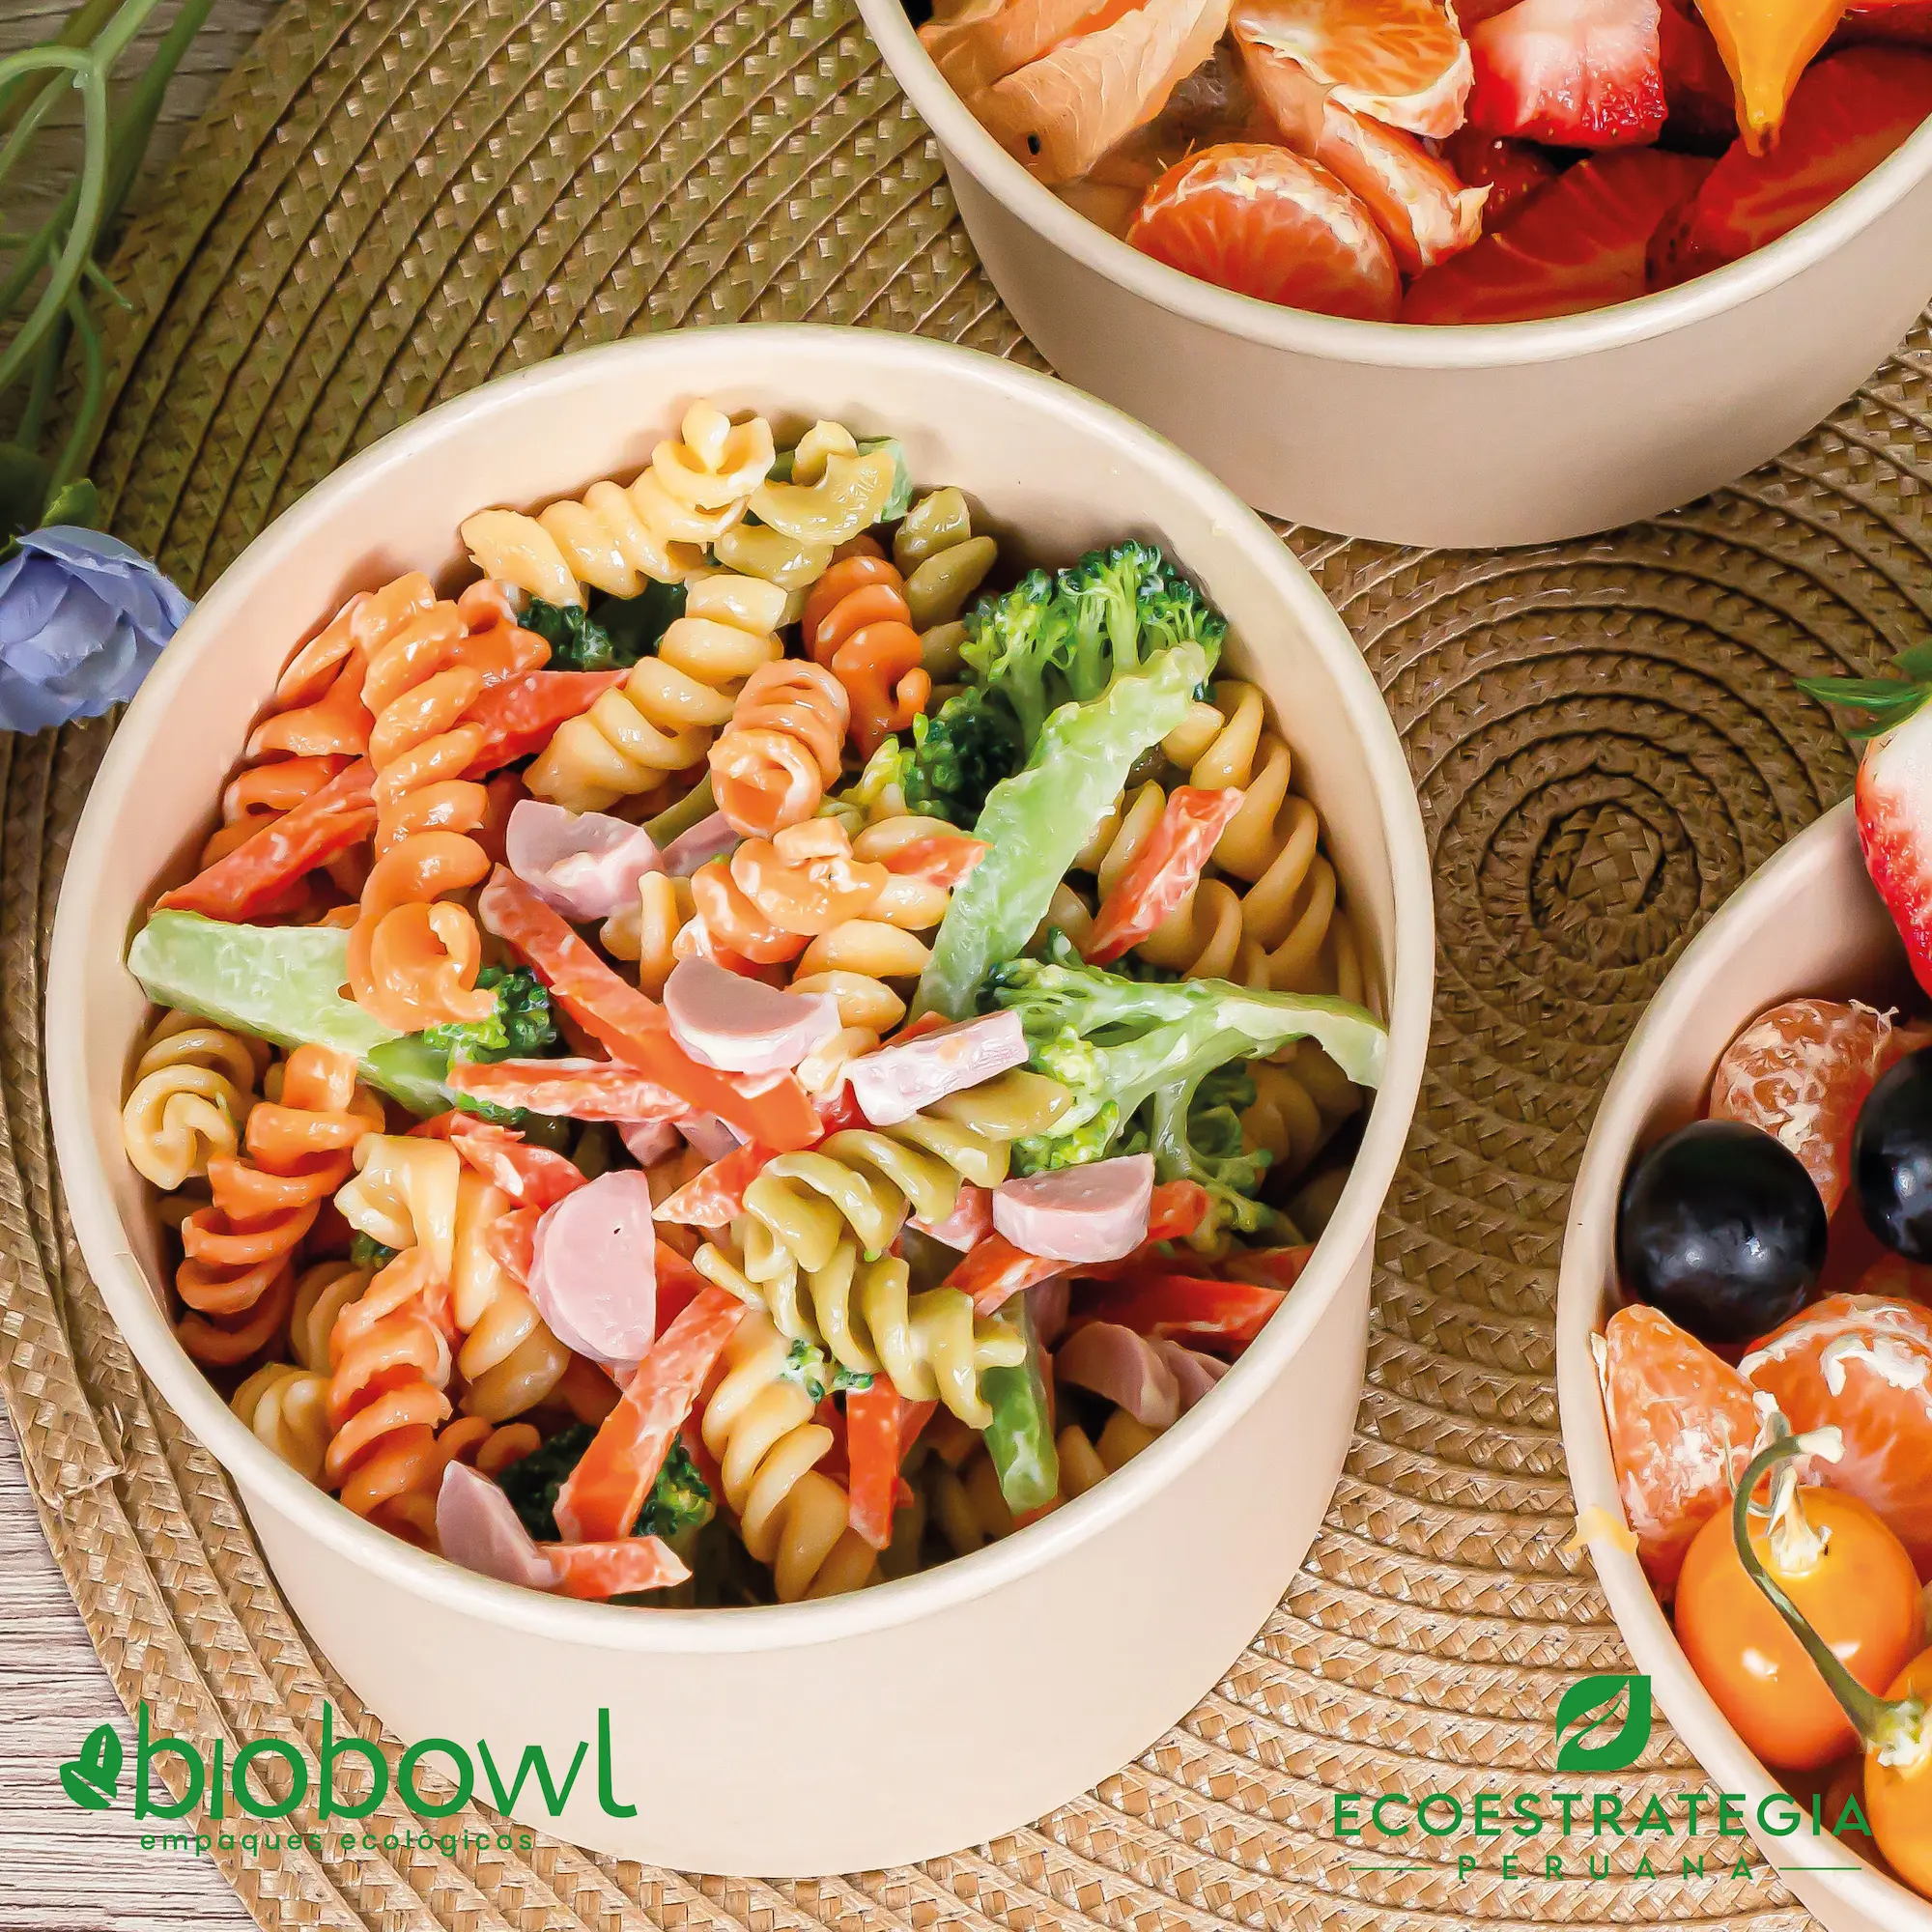 Esta bowl biodegradable de 1000 ml es a base de fibra de bambu. Envases descartables con gramaje ideal, cotiza tus empaques, platos y tapers para alimentos